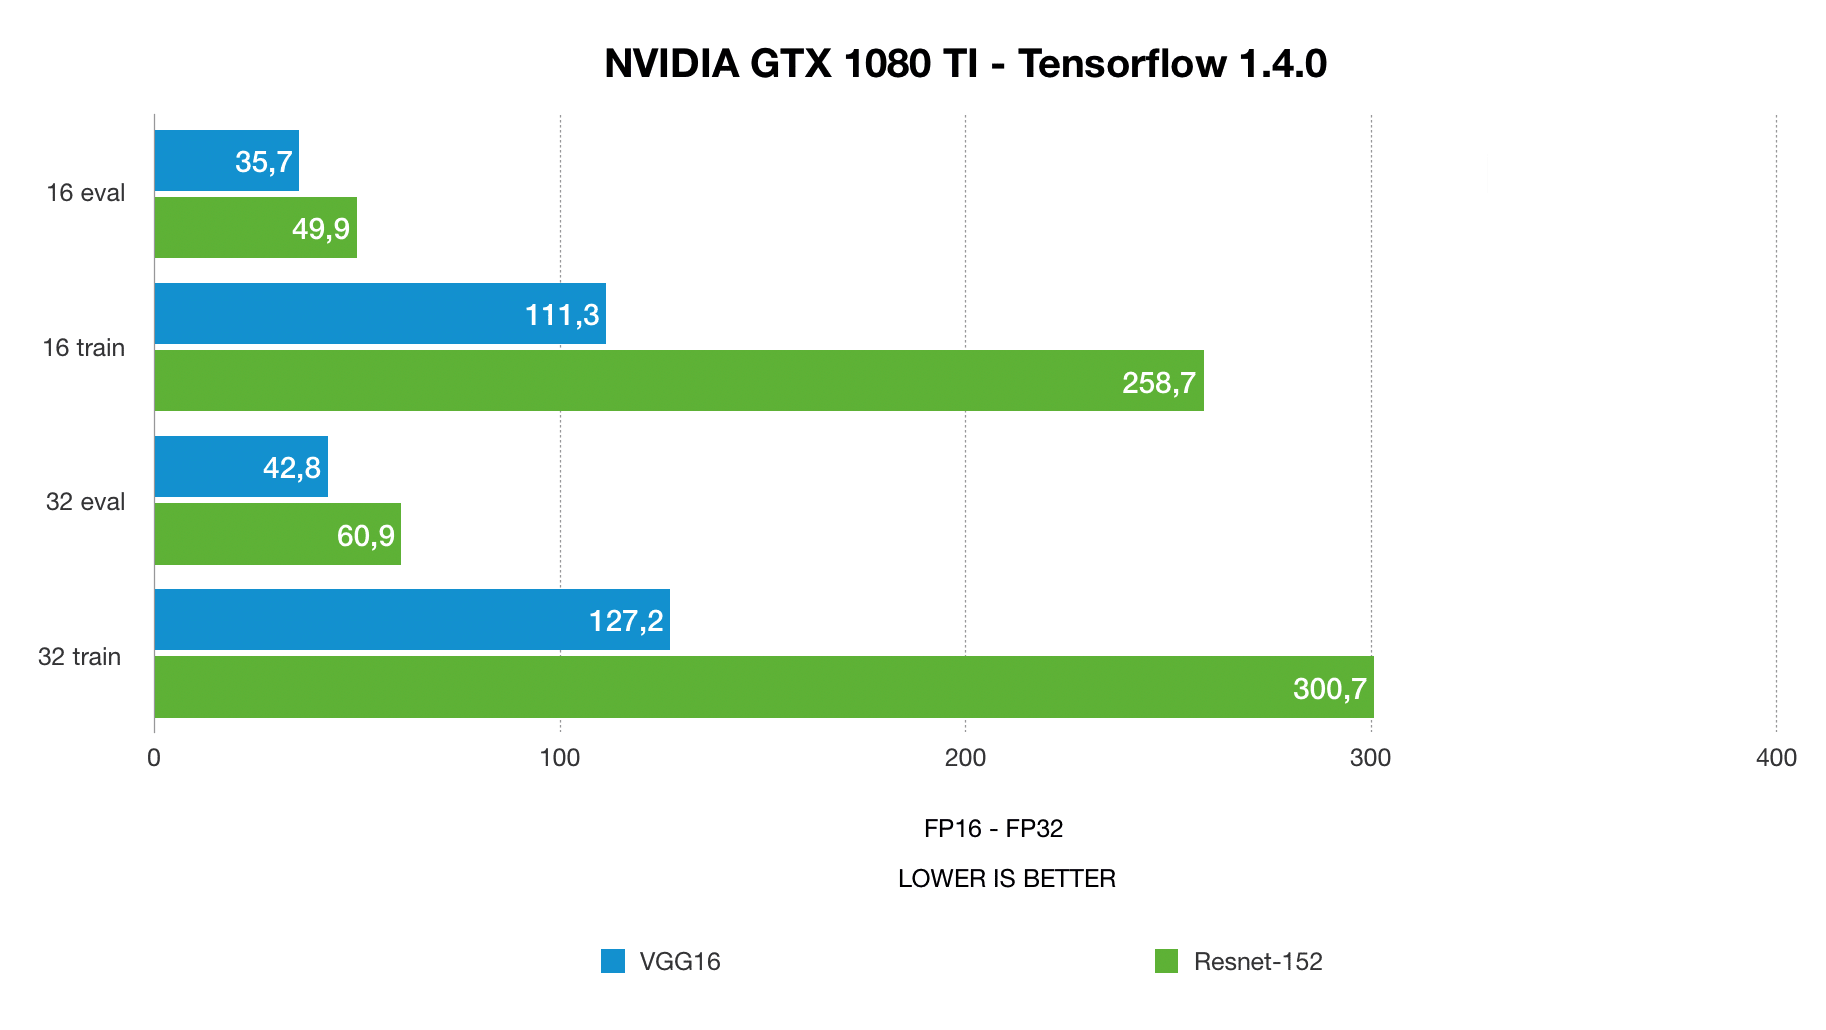 nvidia GTX 1080 Ti deep learning benchmarks